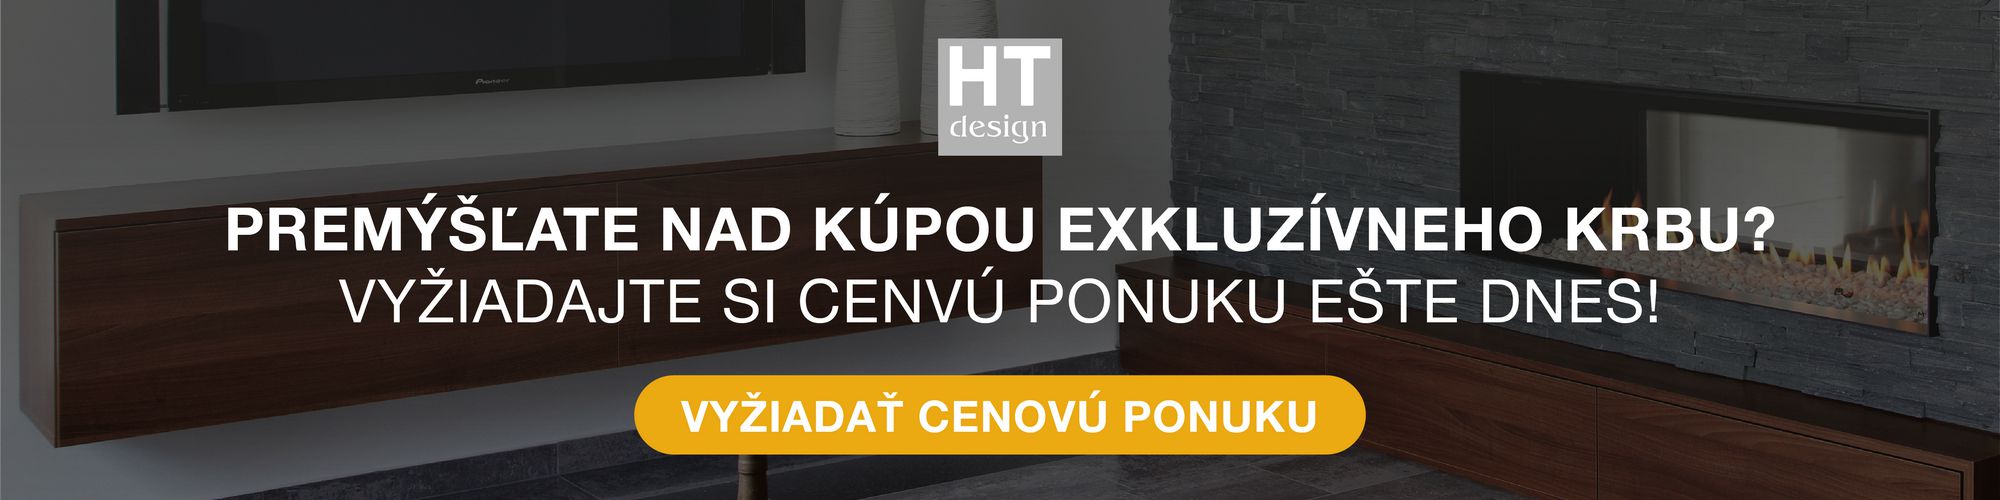 ht-design-banner_web